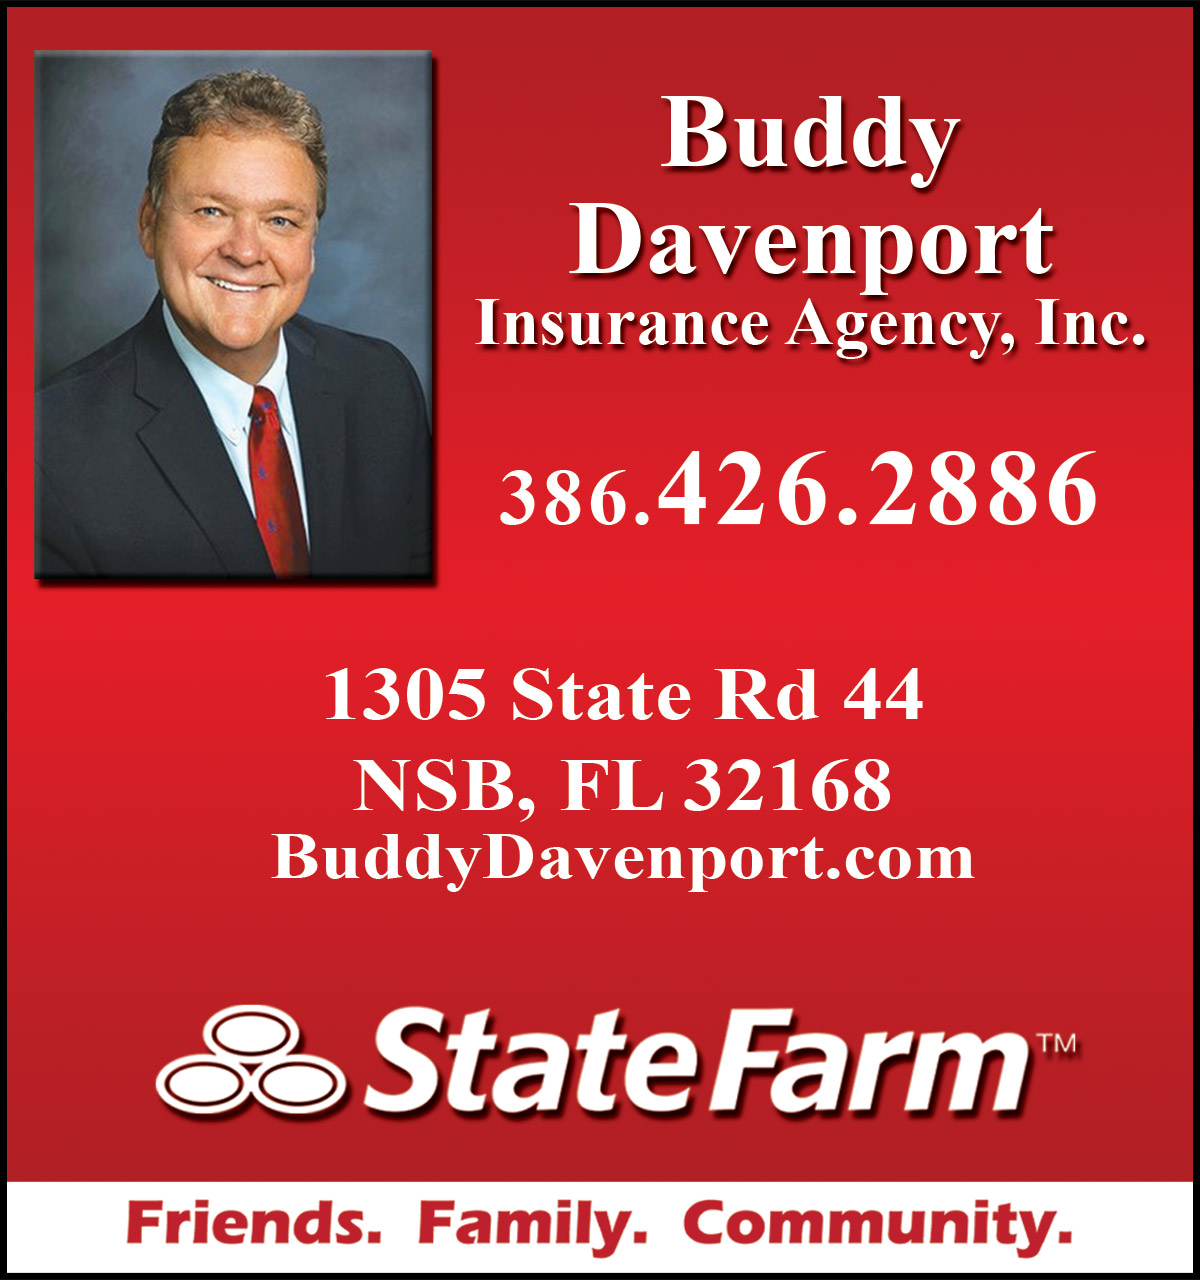 Buddy Davenport Info